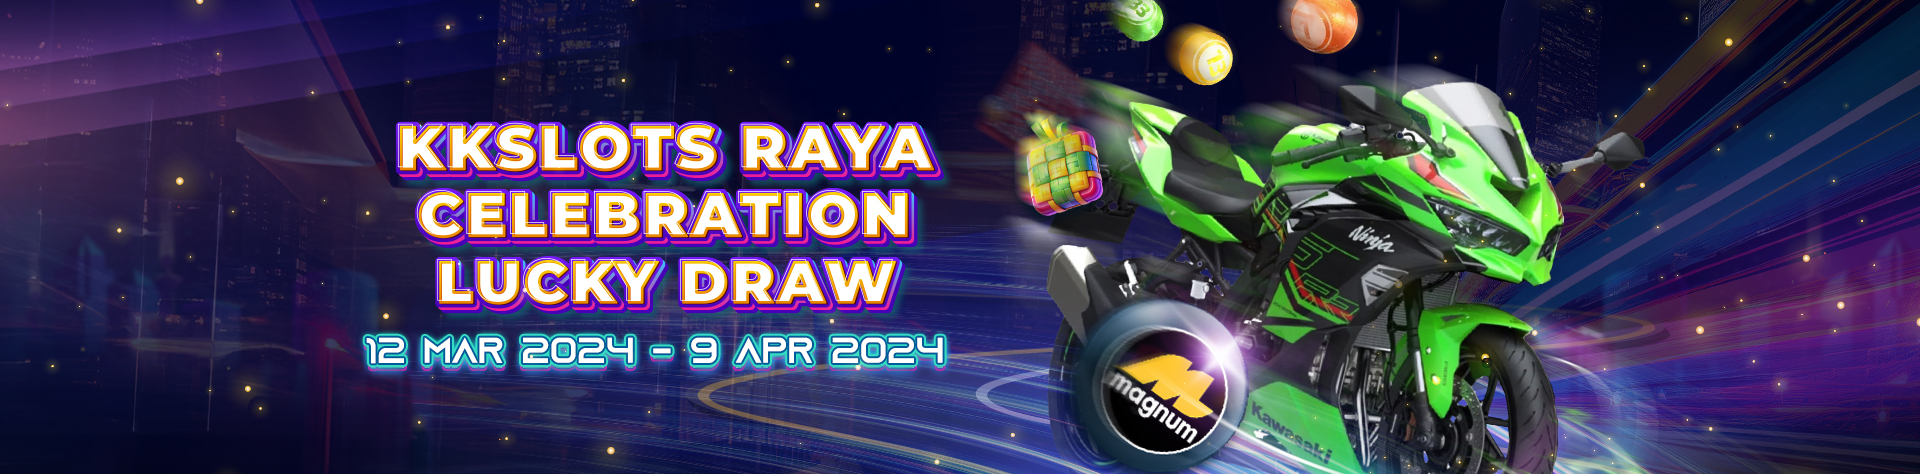 Raya-Celebration-Lucky-Draw.jpg